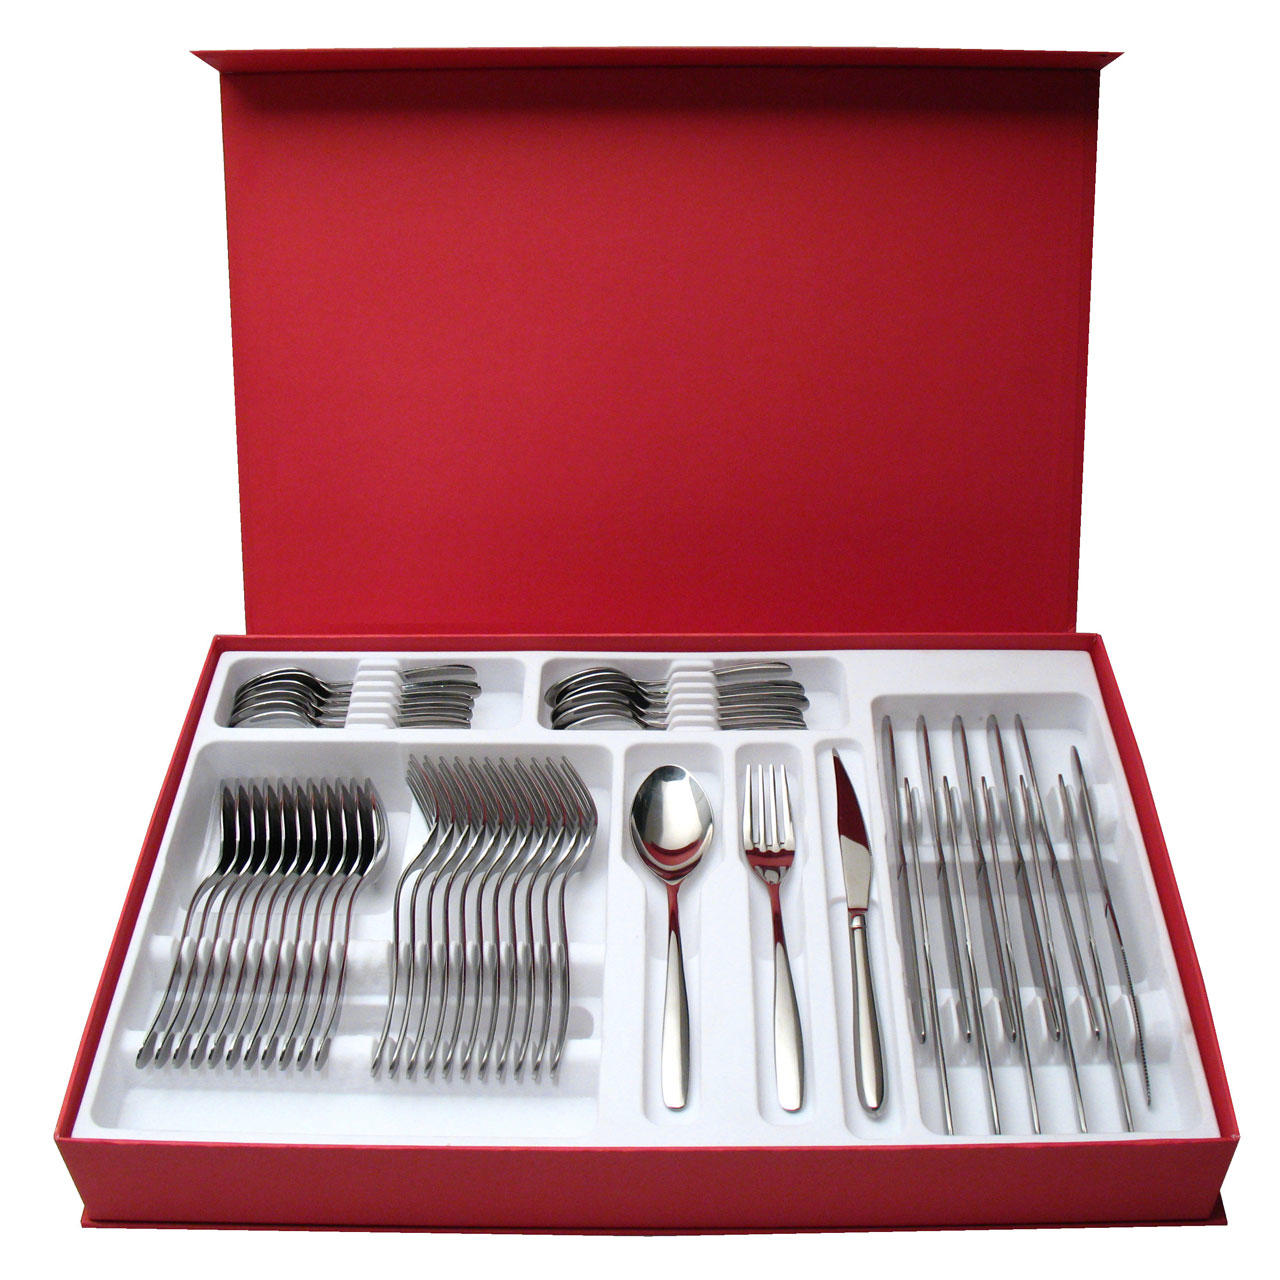 66111047 48 pcs. cutlery set Design Case 